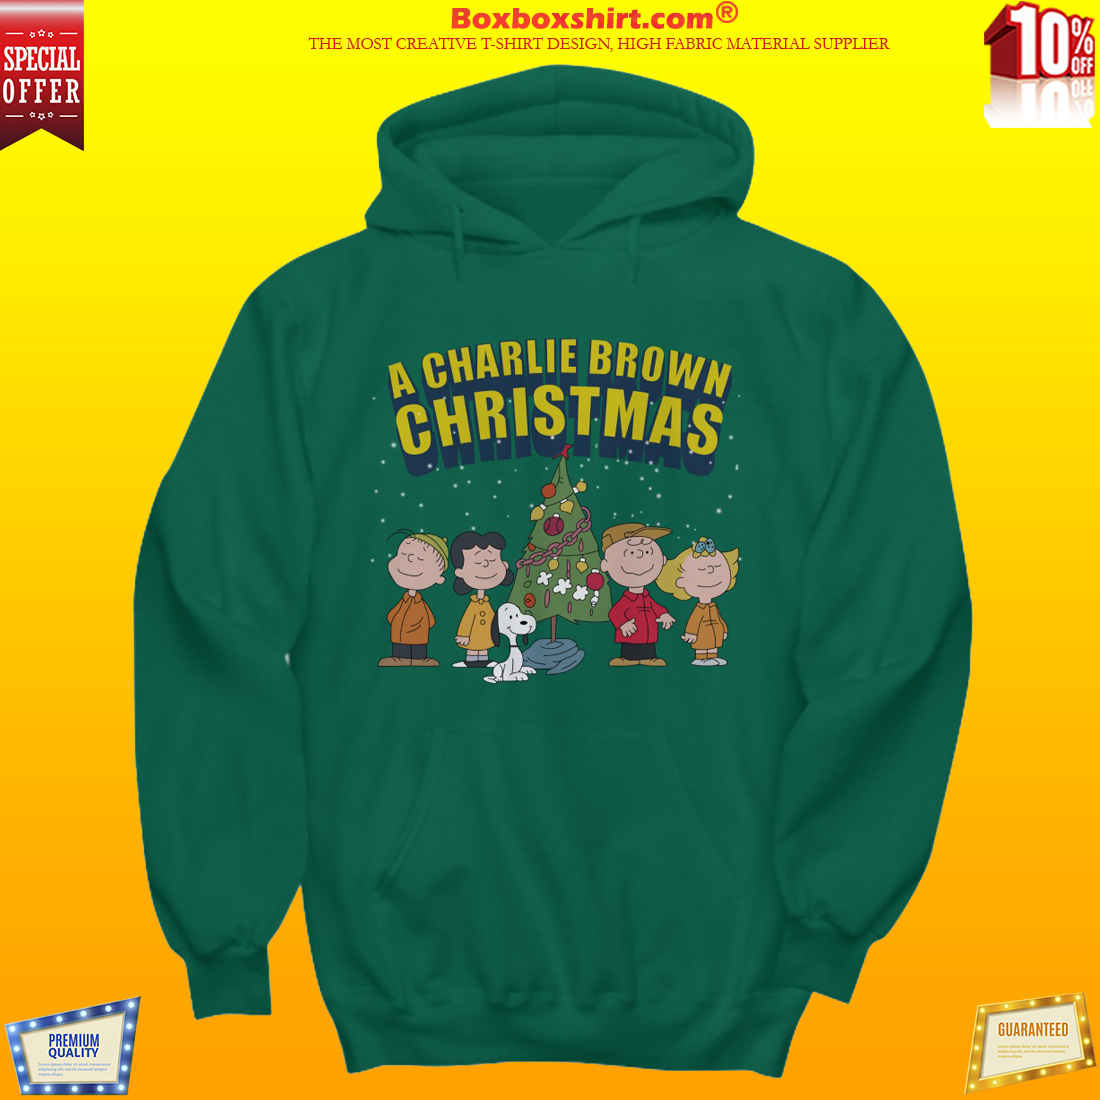 A Charlie Brown Christmas sweatshirt and hoodies